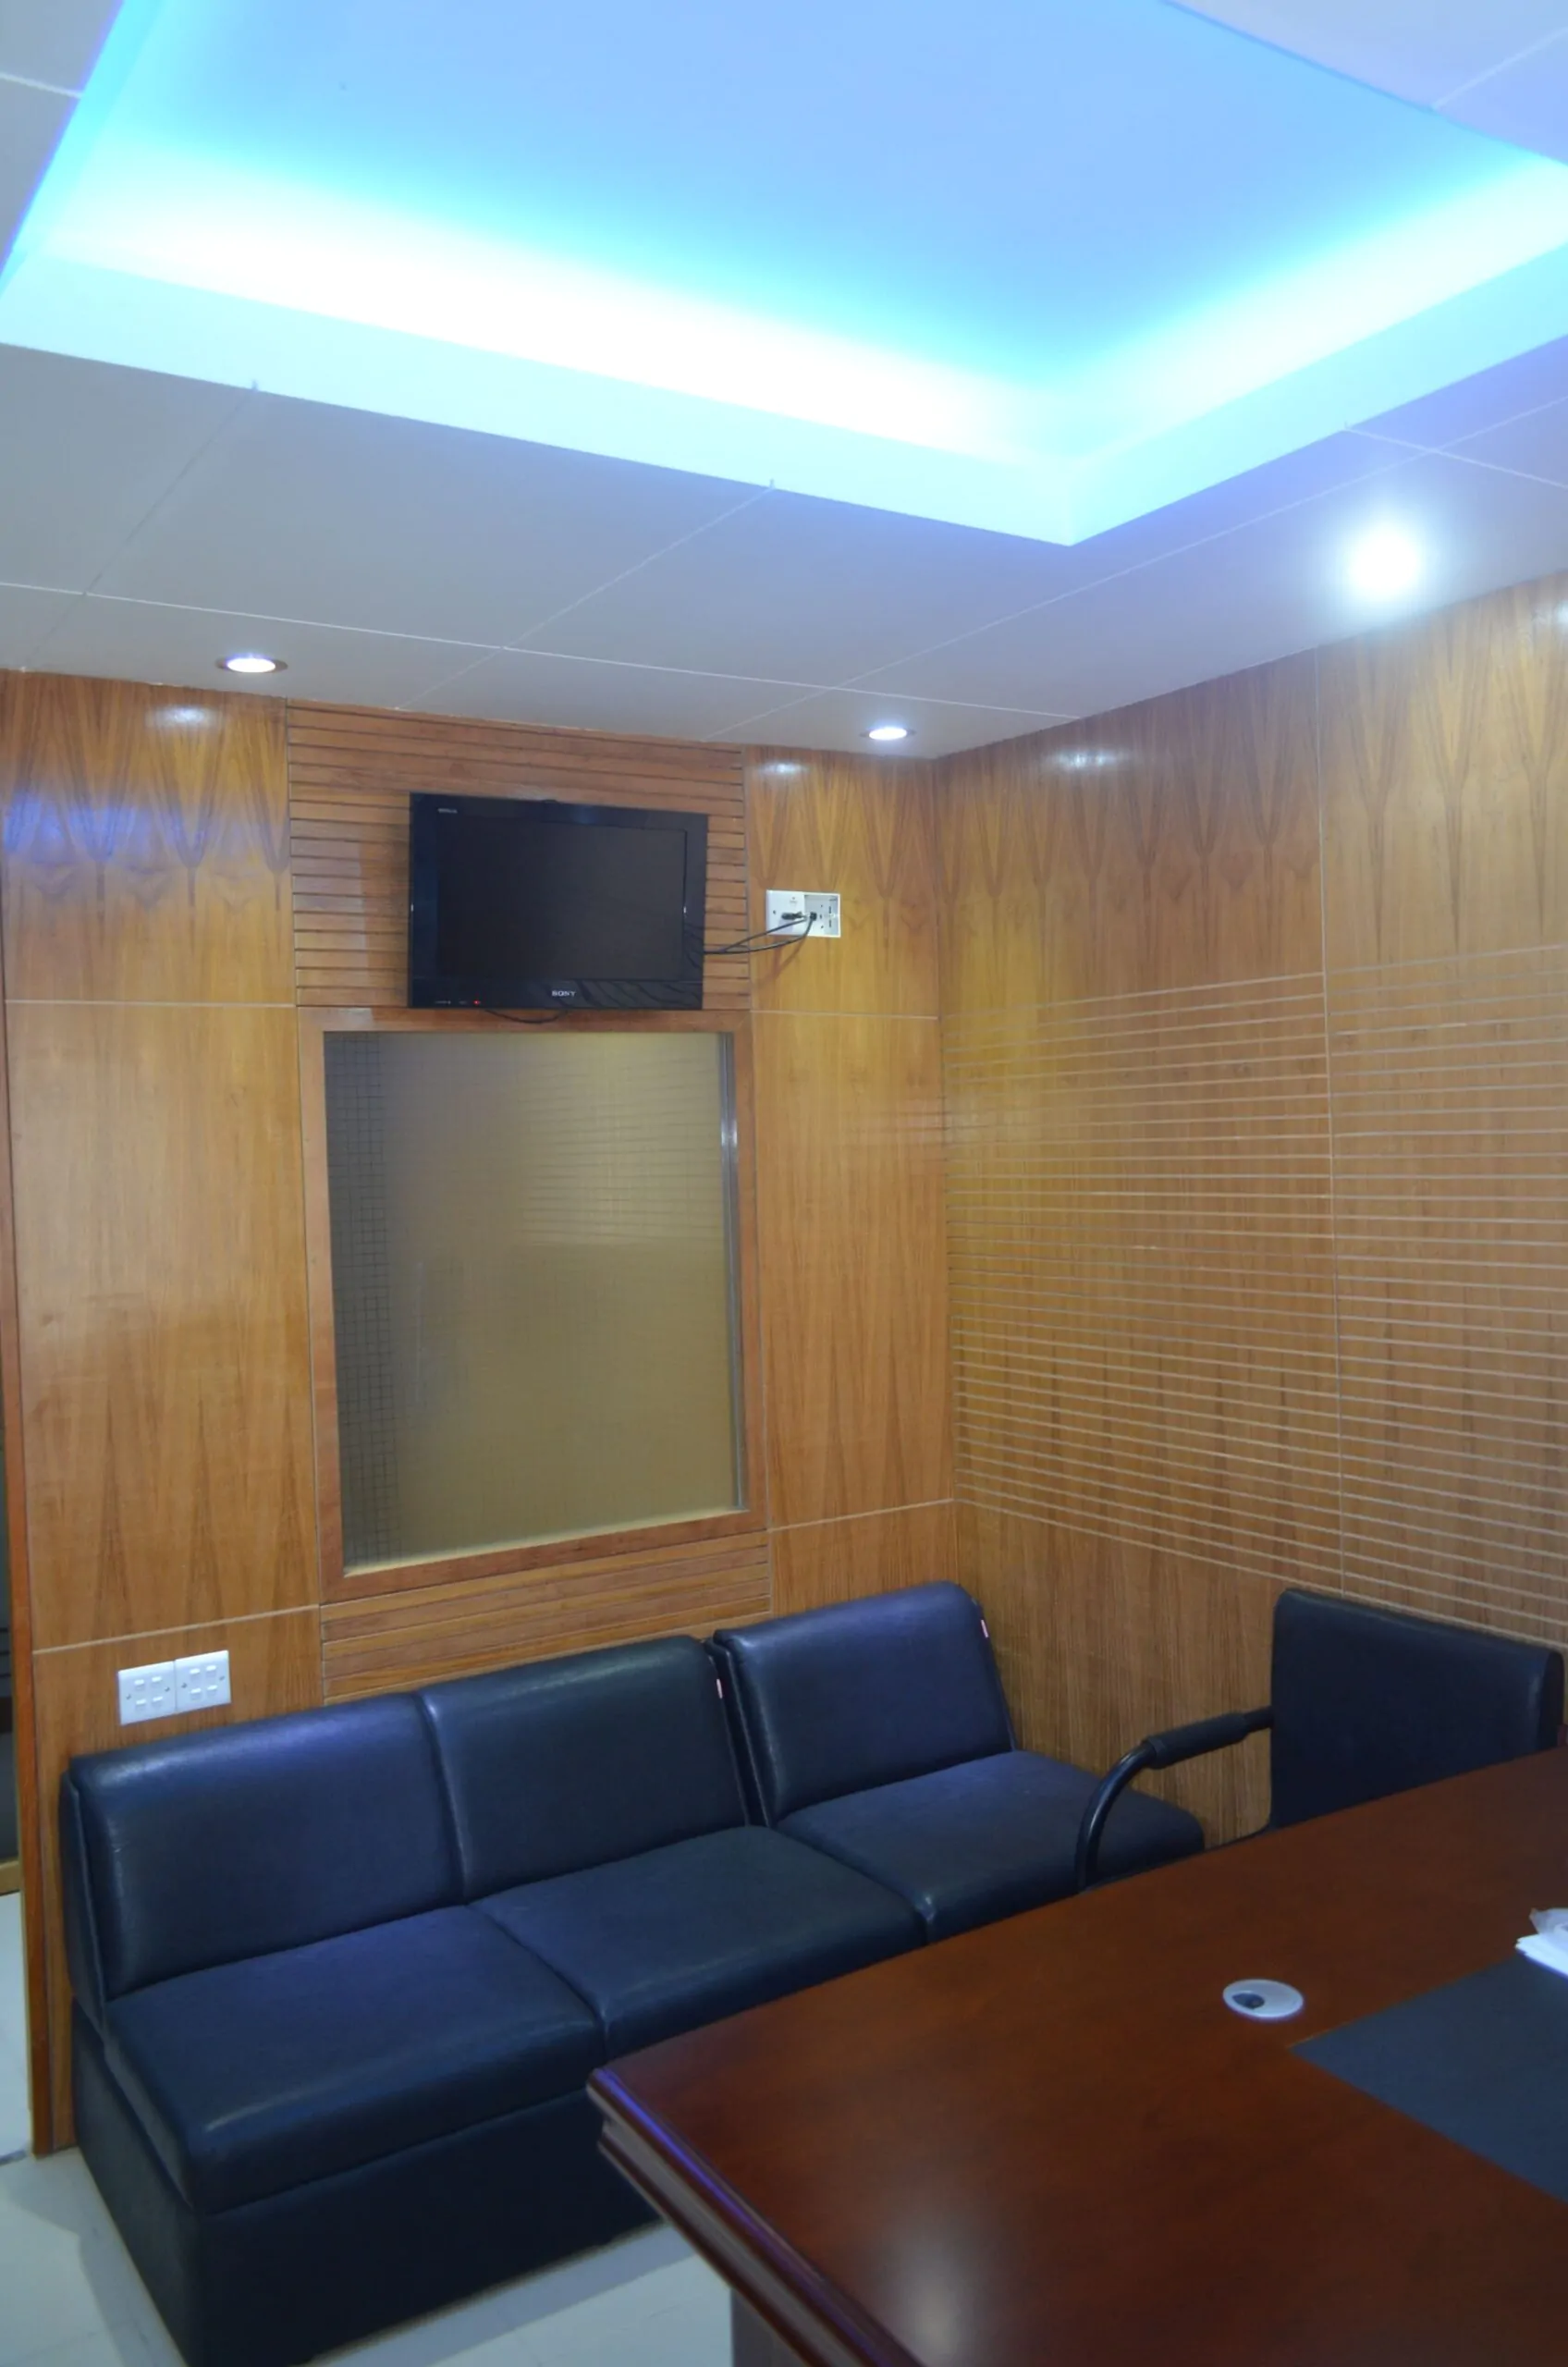 Mia Foundation Paltan Complete Project Corporate Office Interior Design (15)